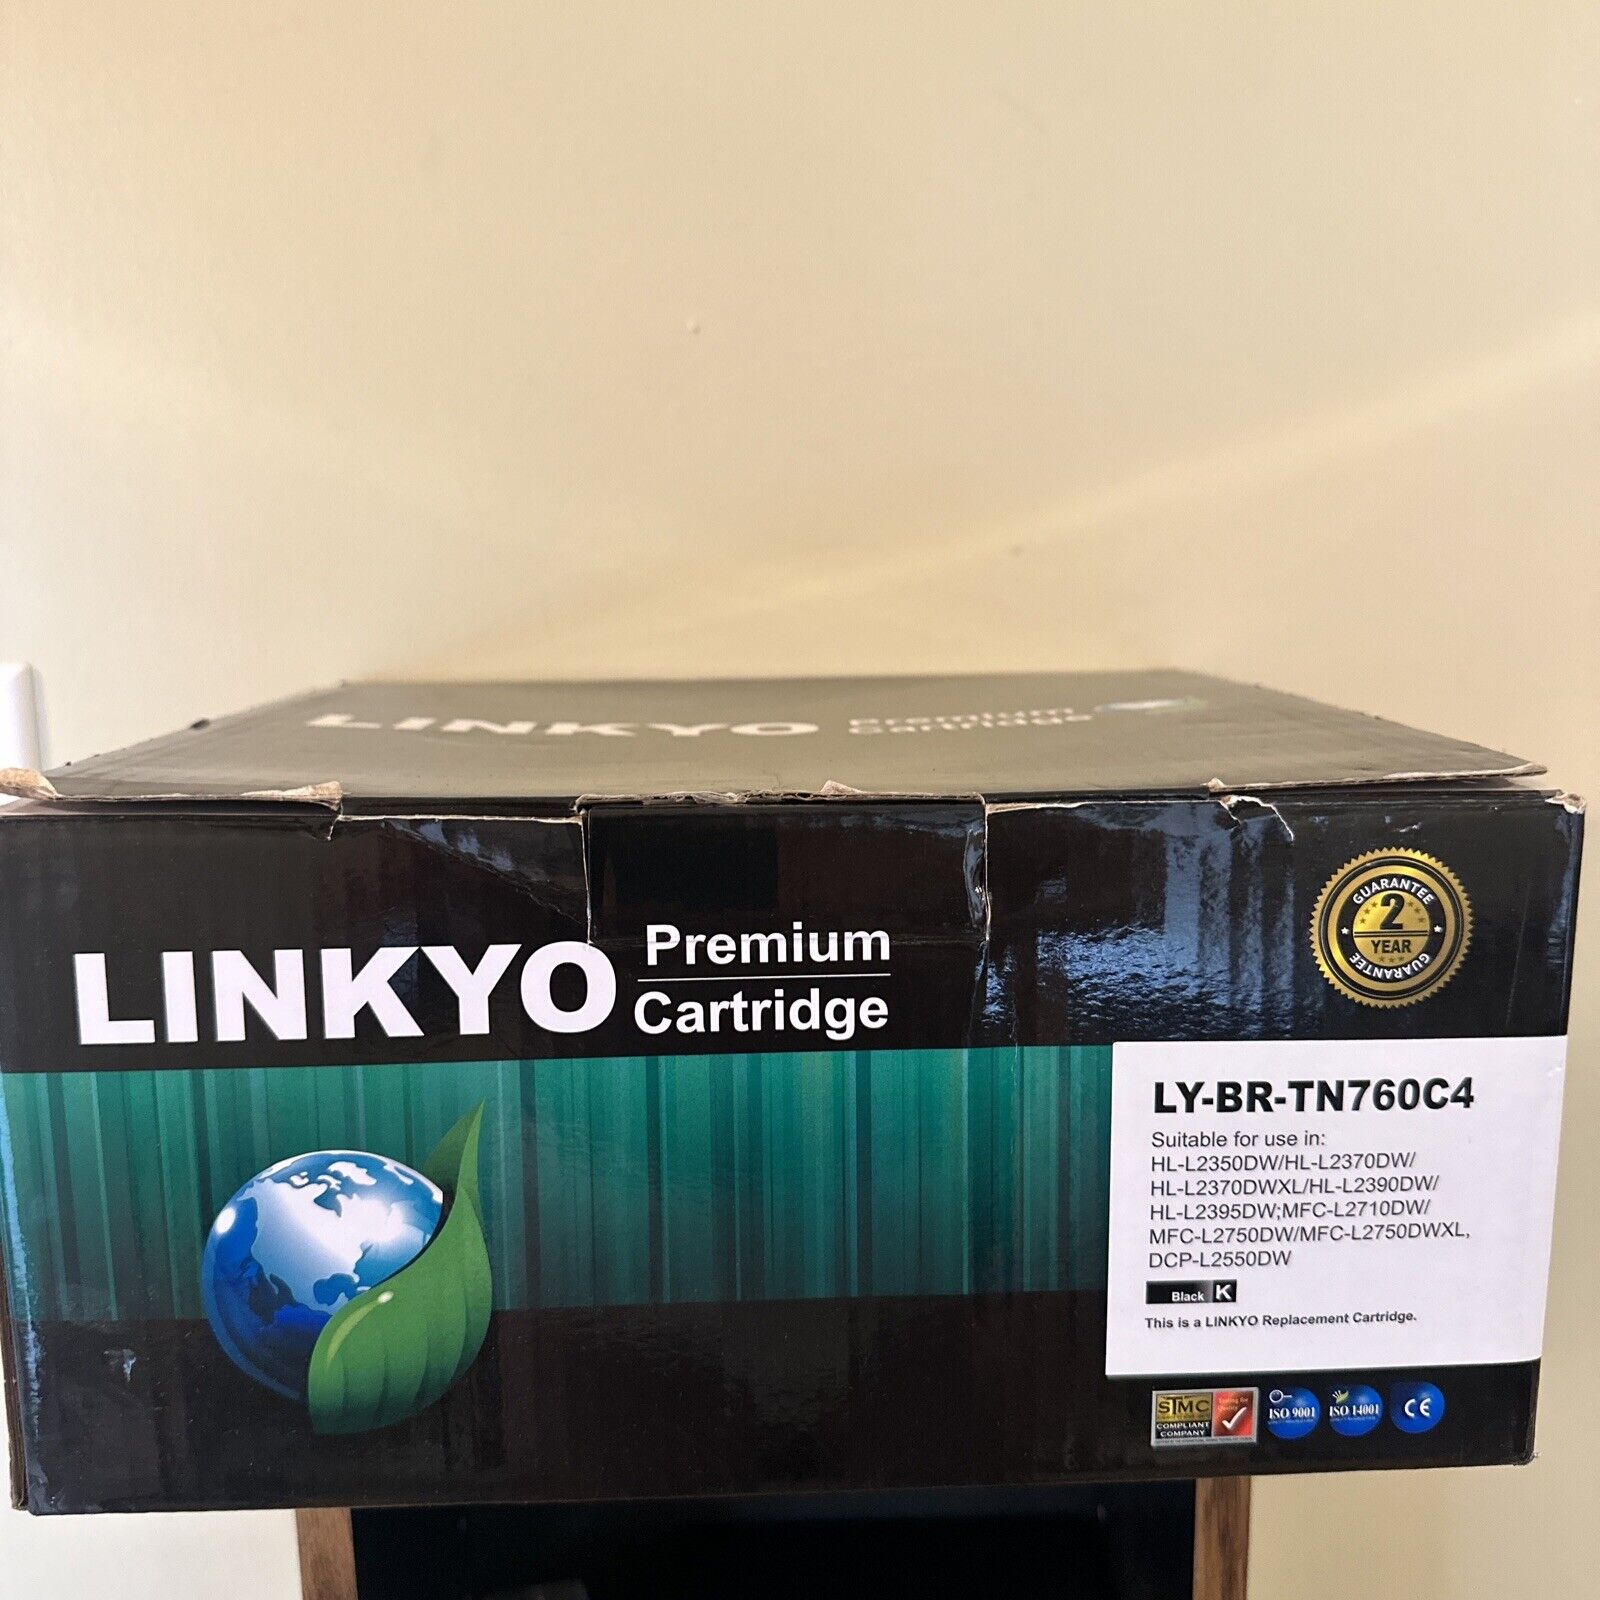 4-Pack Linkyo Premium Cartridge LY-BR-TN760C4 Black Printer Ink Replacement